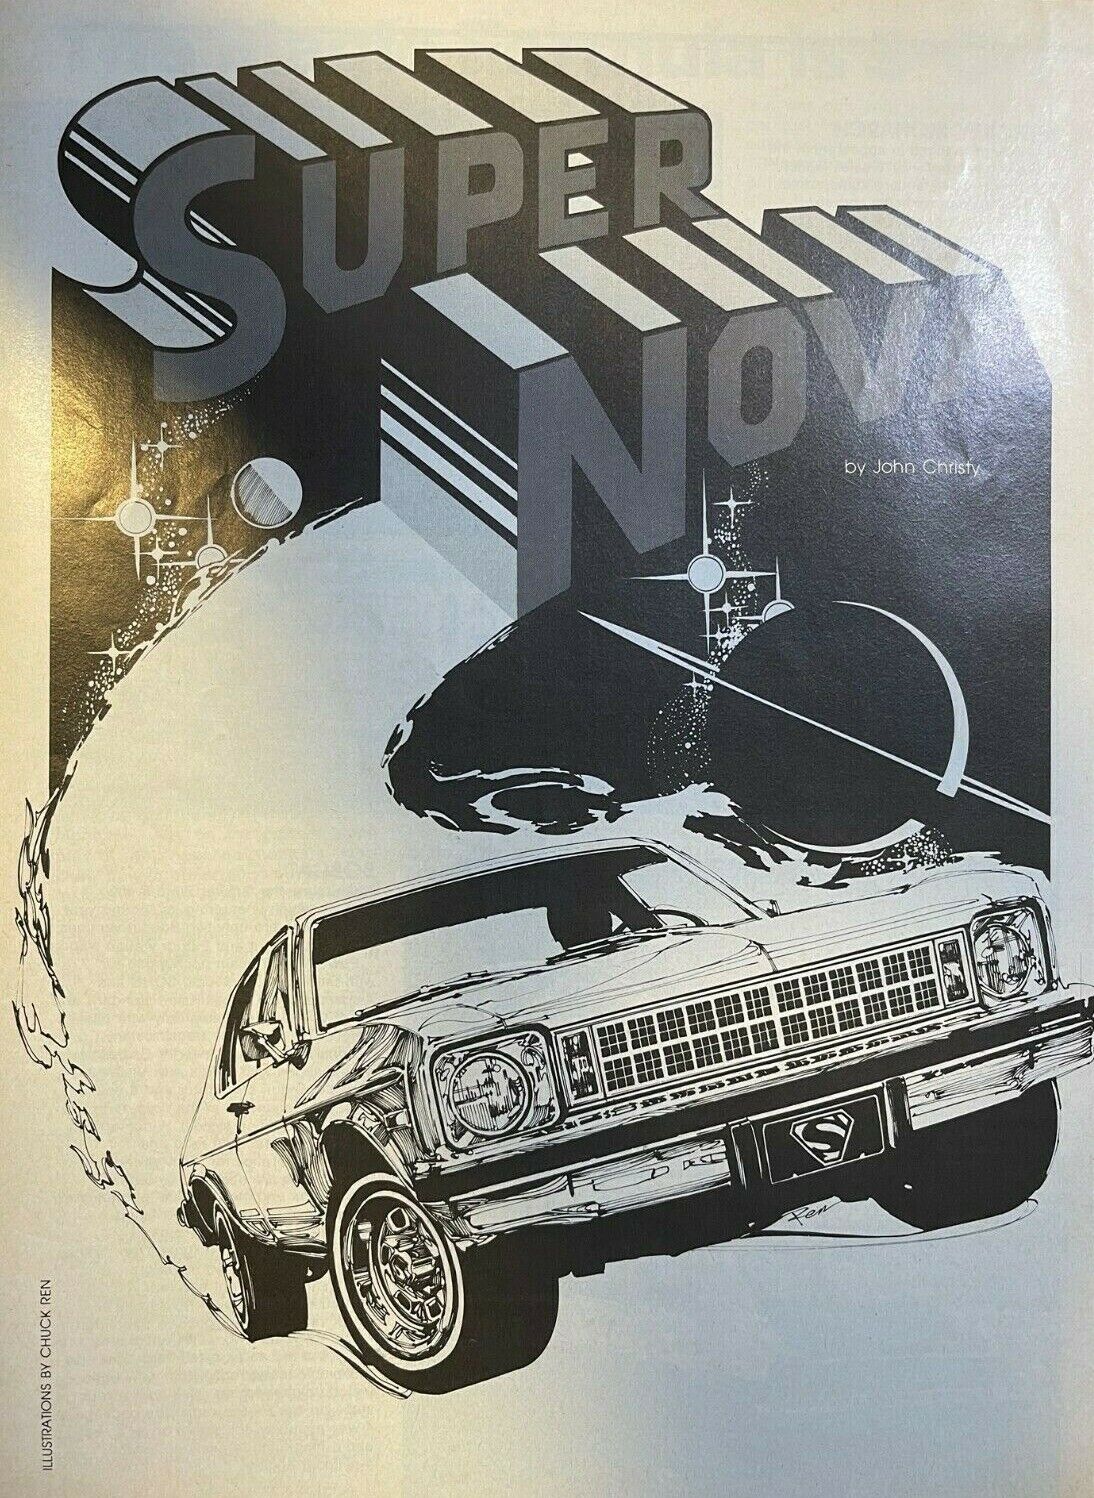 1976 Road Test Chevy Super Nova illustrated